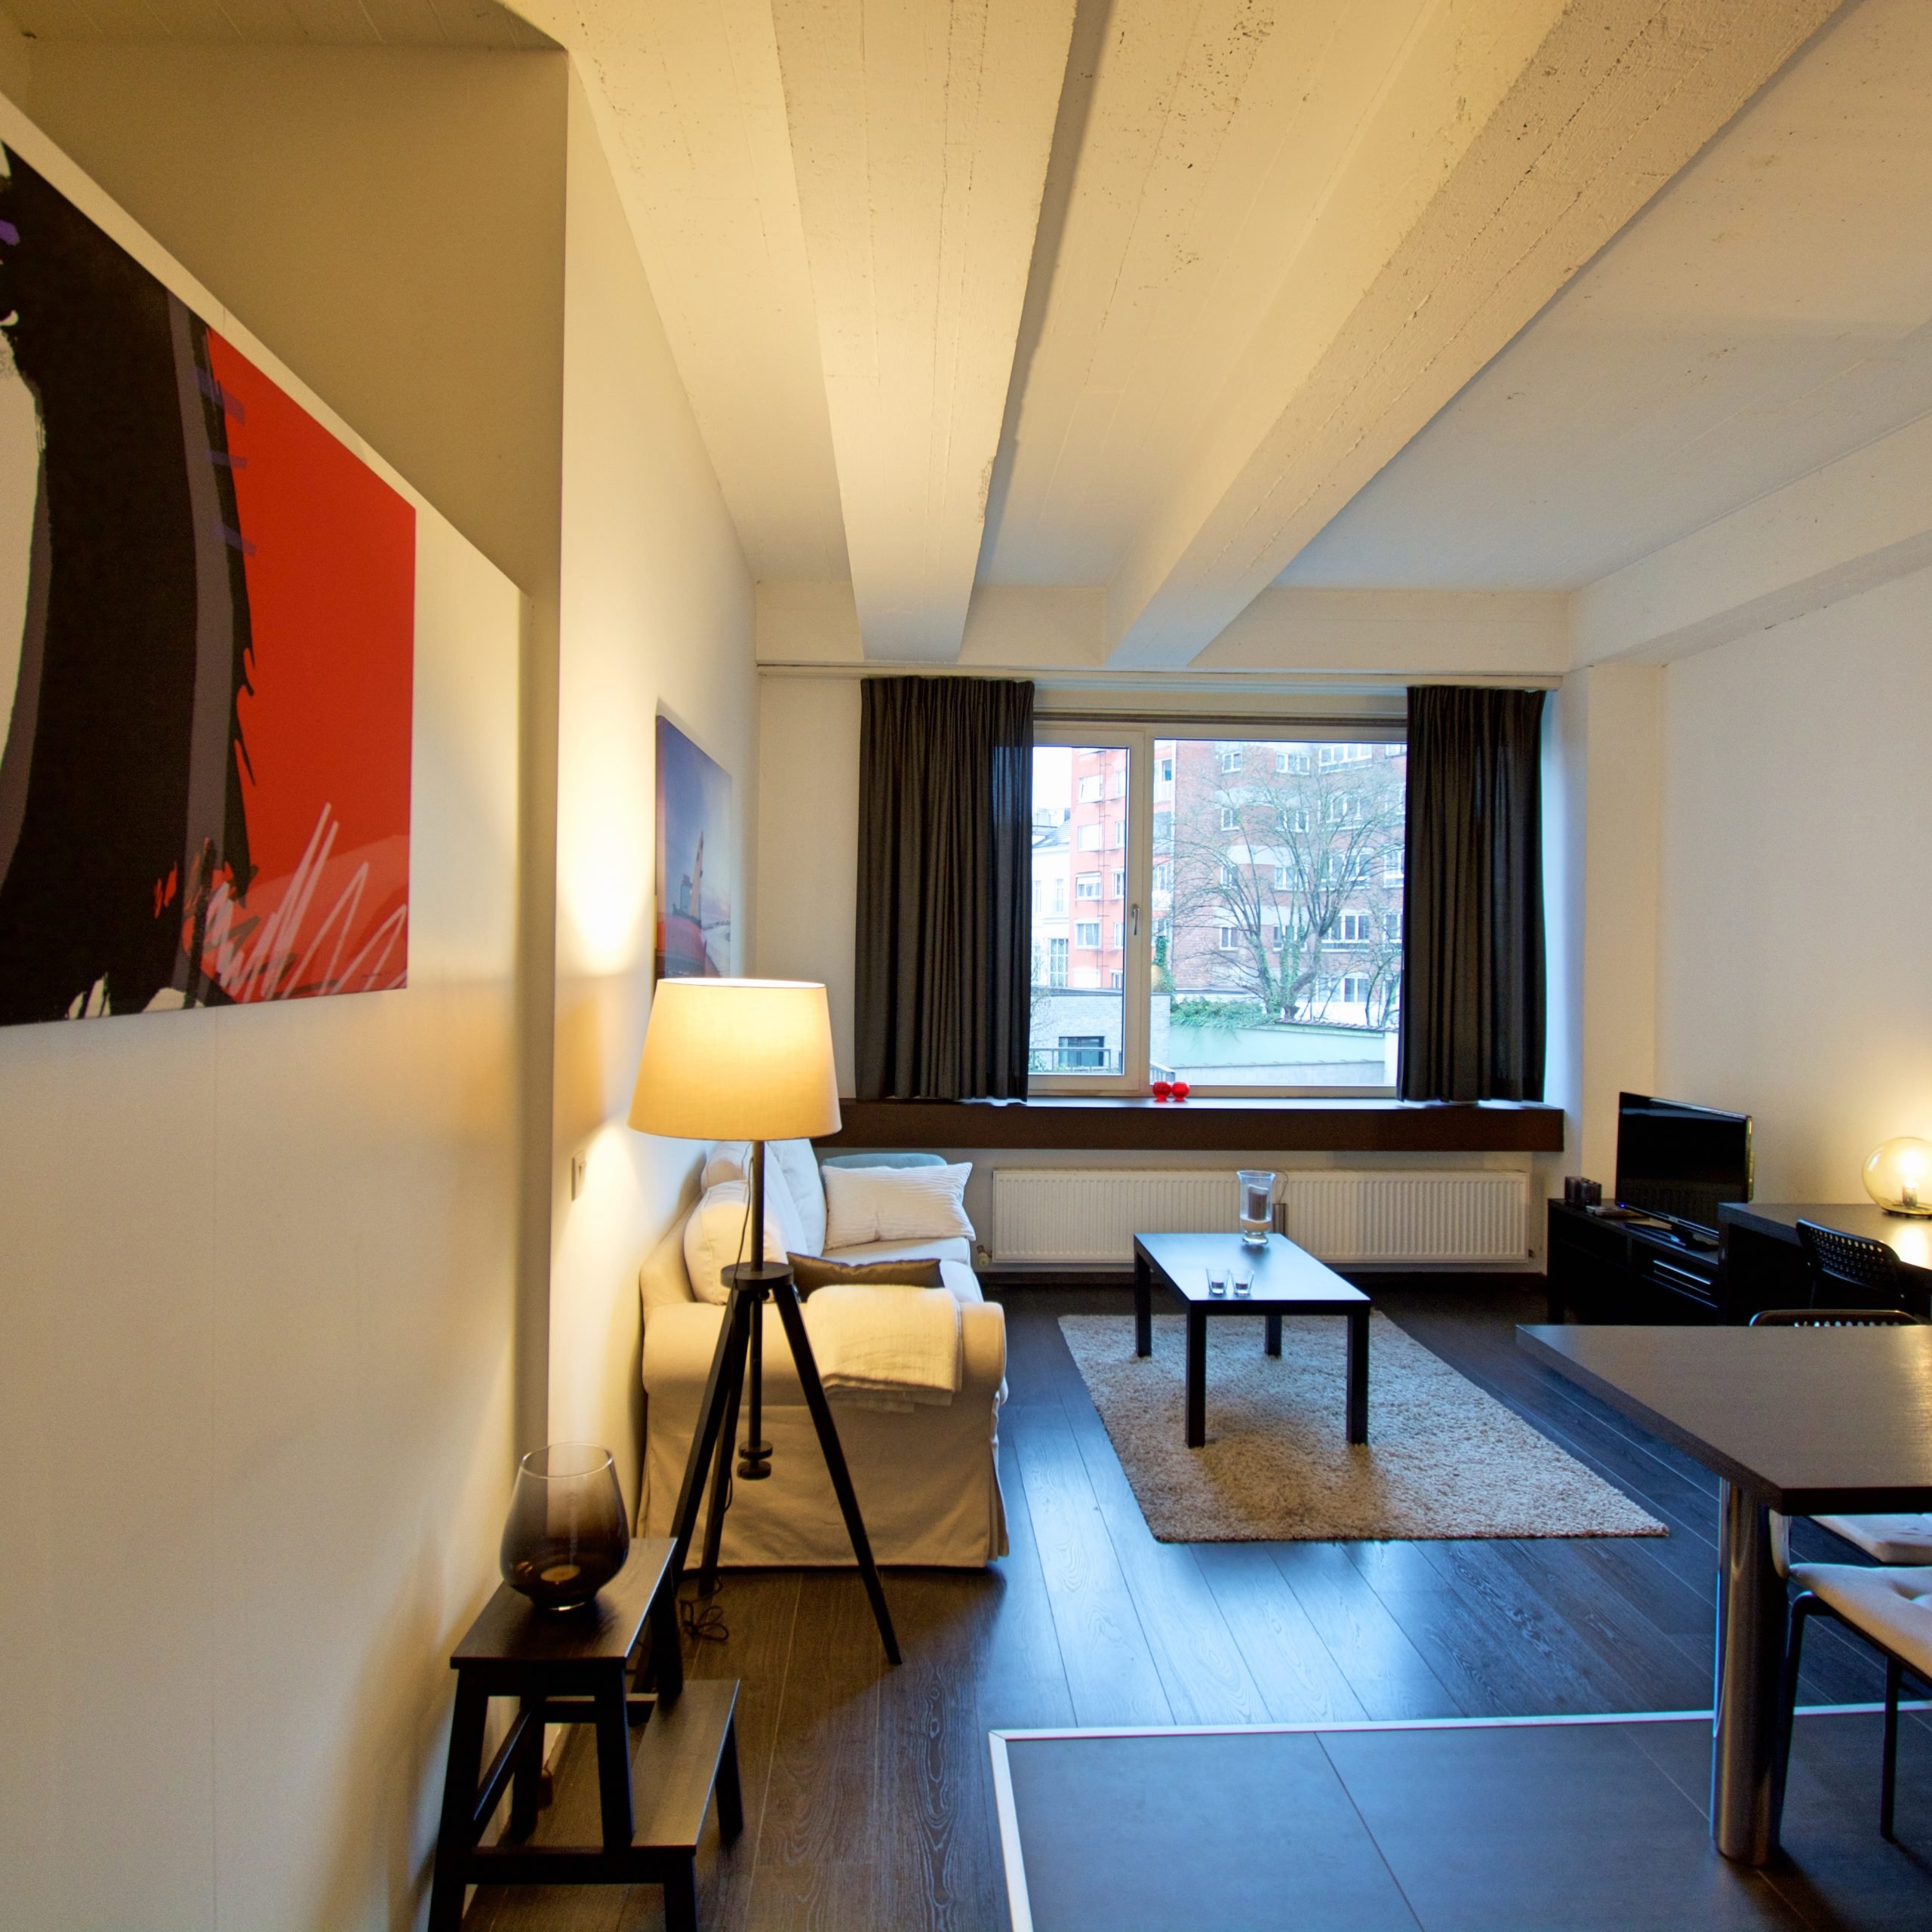 Mikado - Attractive expat apartment in Antwerp centre7